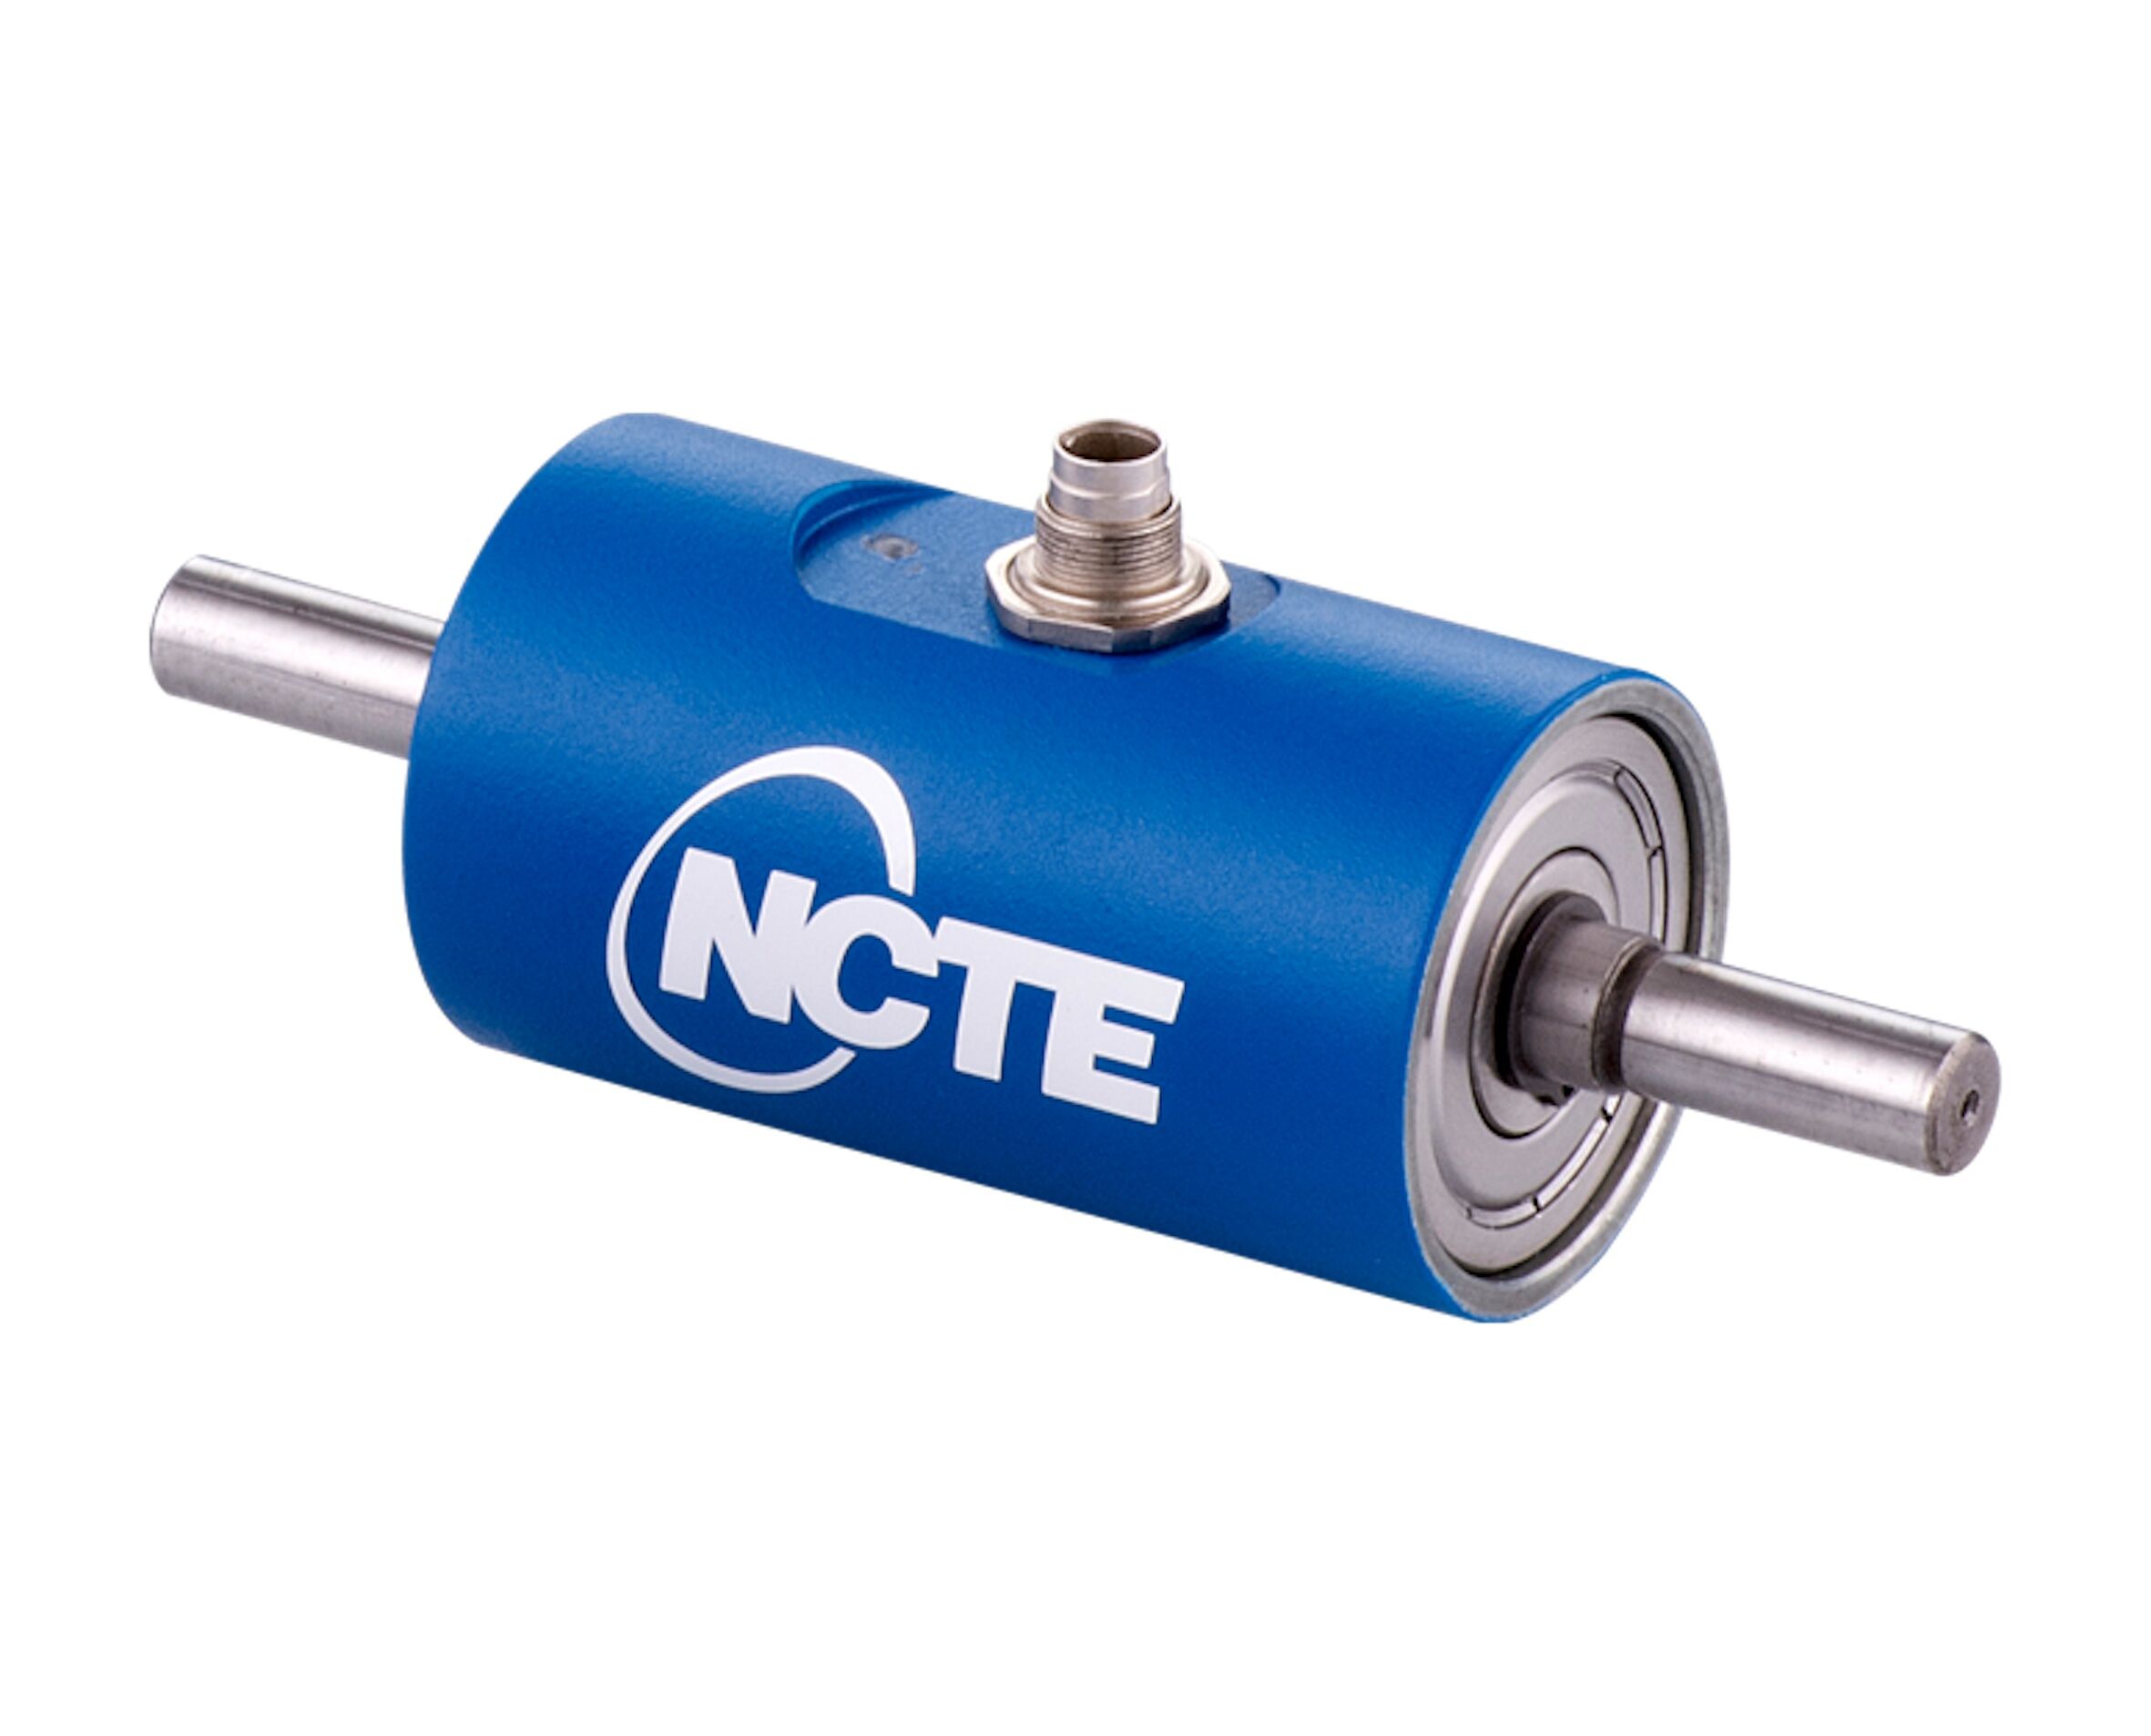 NCTE expands 2300 series torque sensors with new 0.5 Nm low measurement range variant